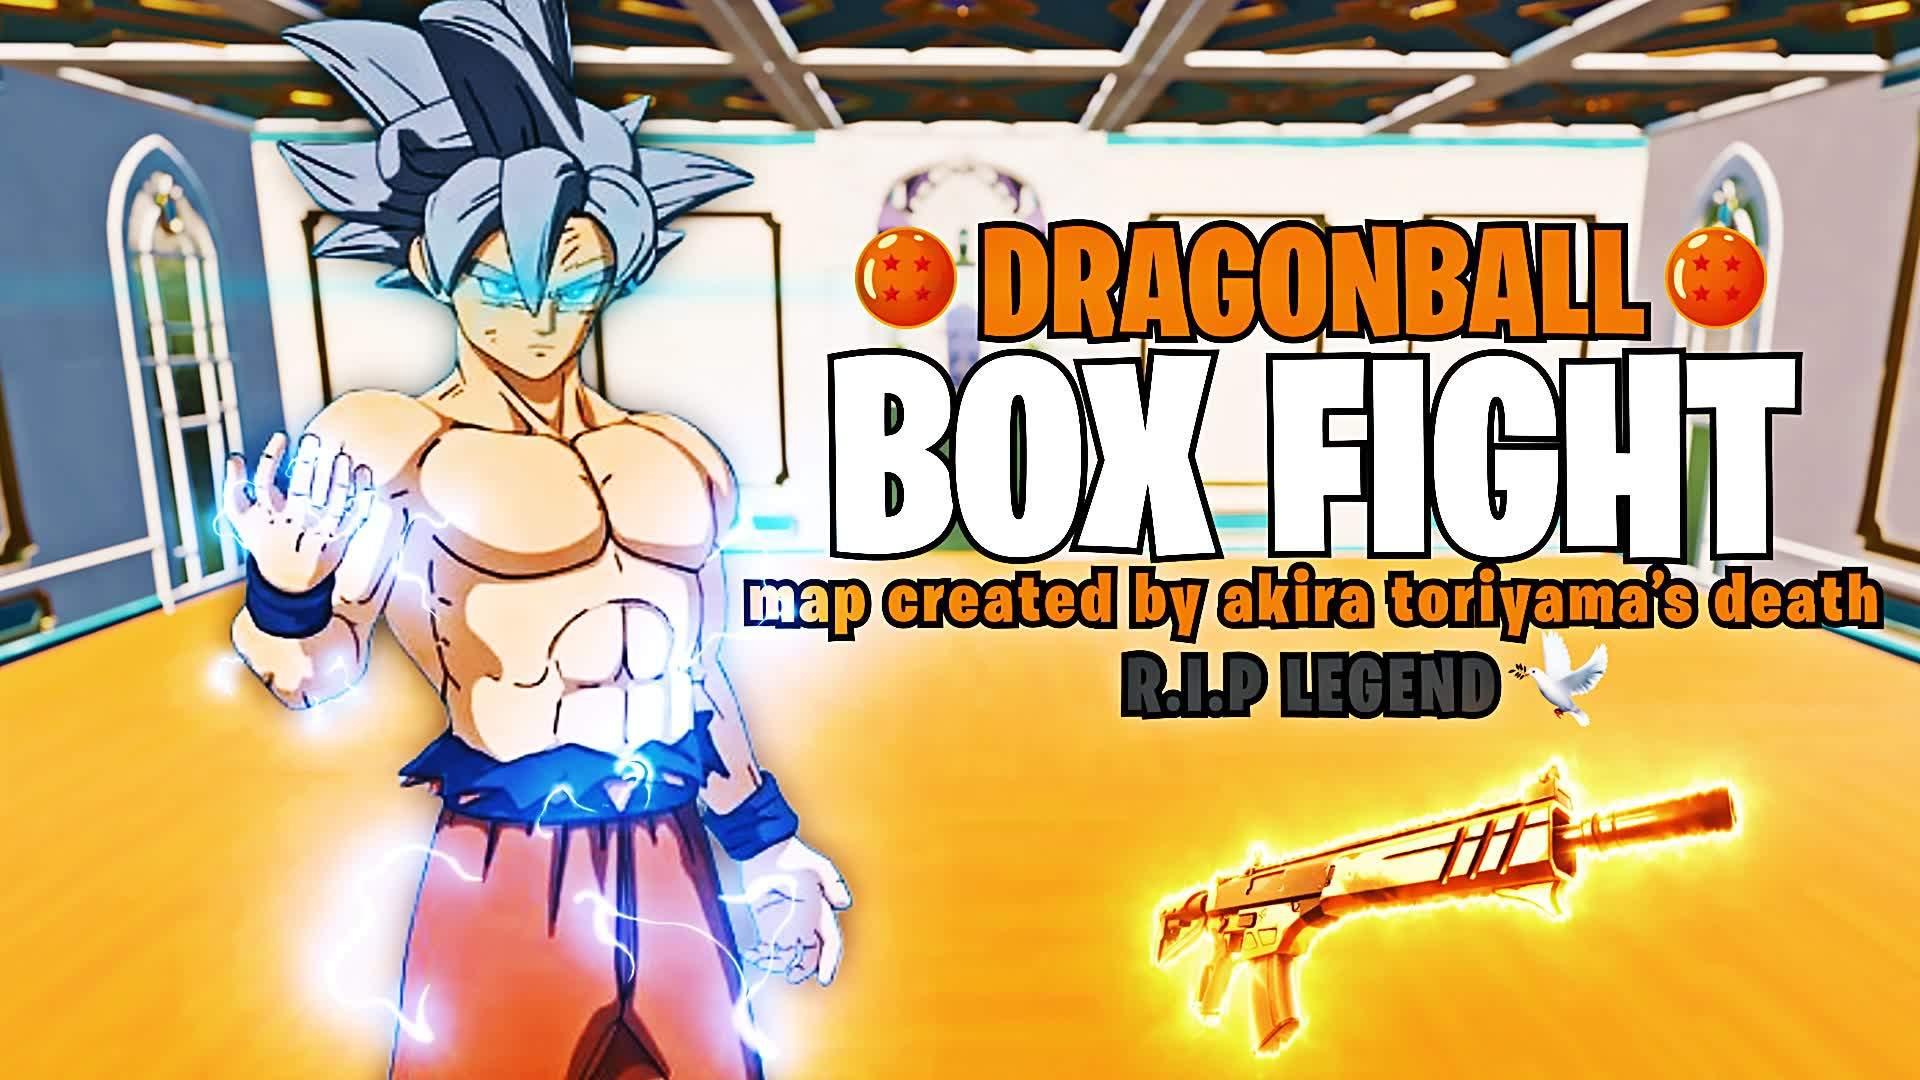 DragonBall Box Fight